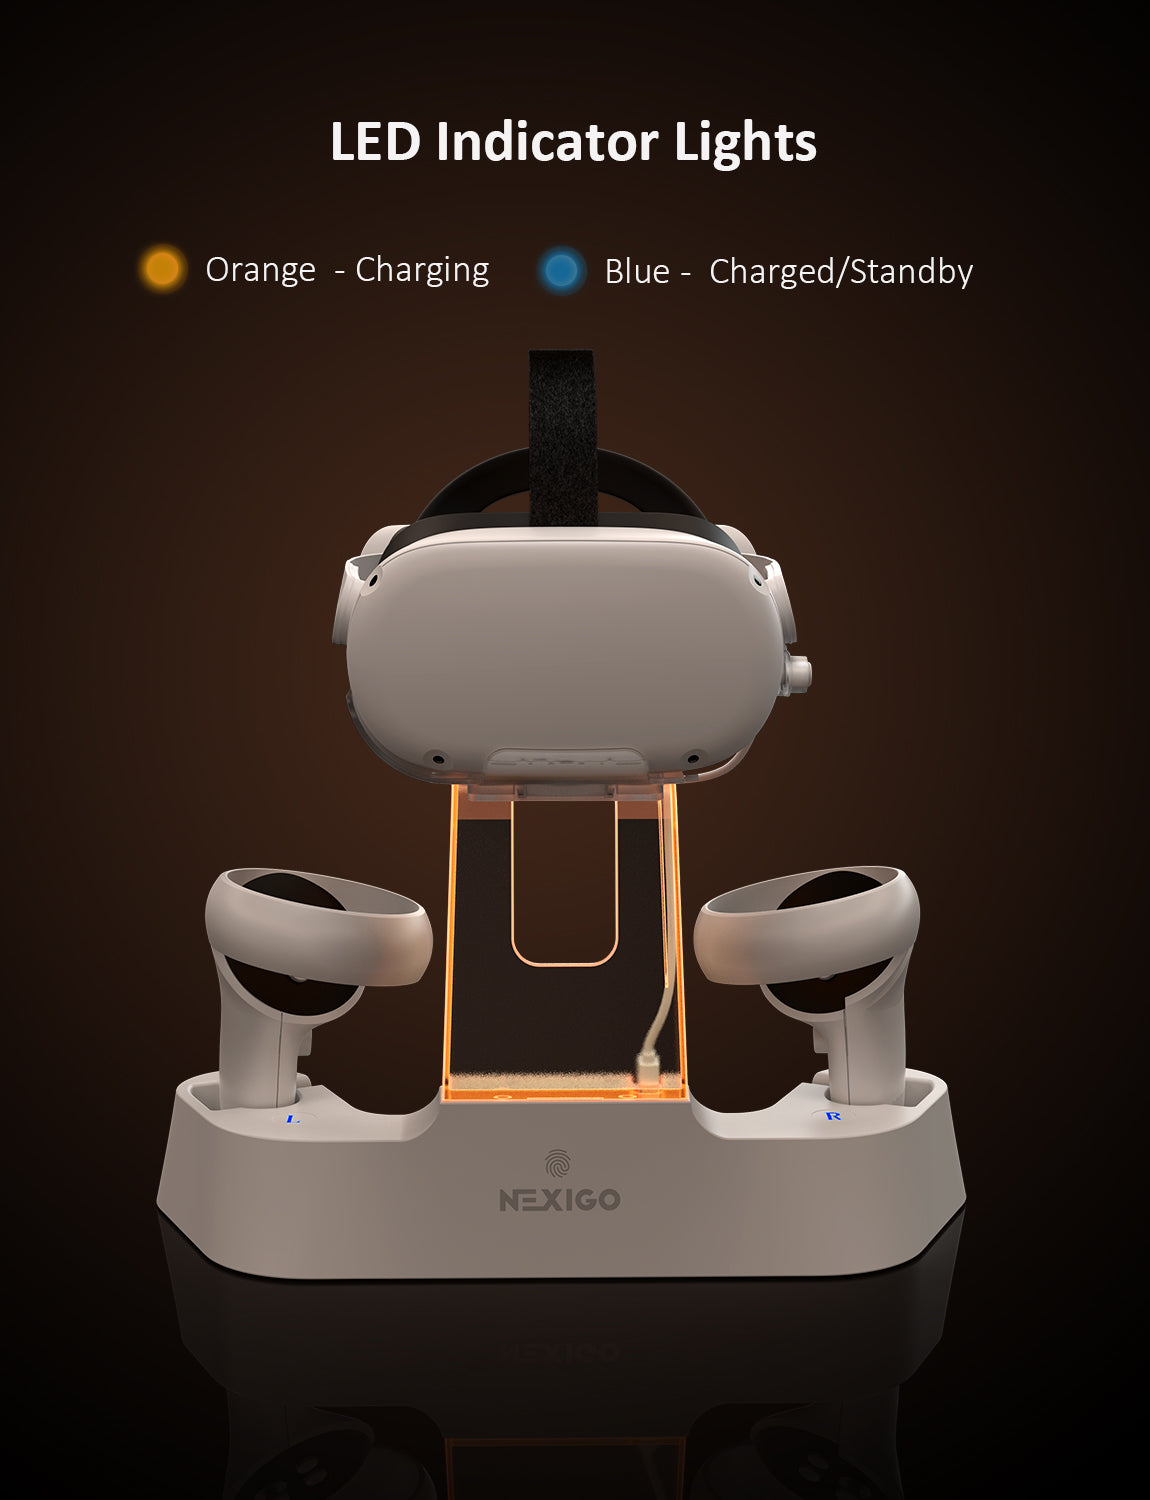 NexiGo S20 Pro Charging Dock For Meta/Oculus Quest 2 consumerelectronics - NexiGo